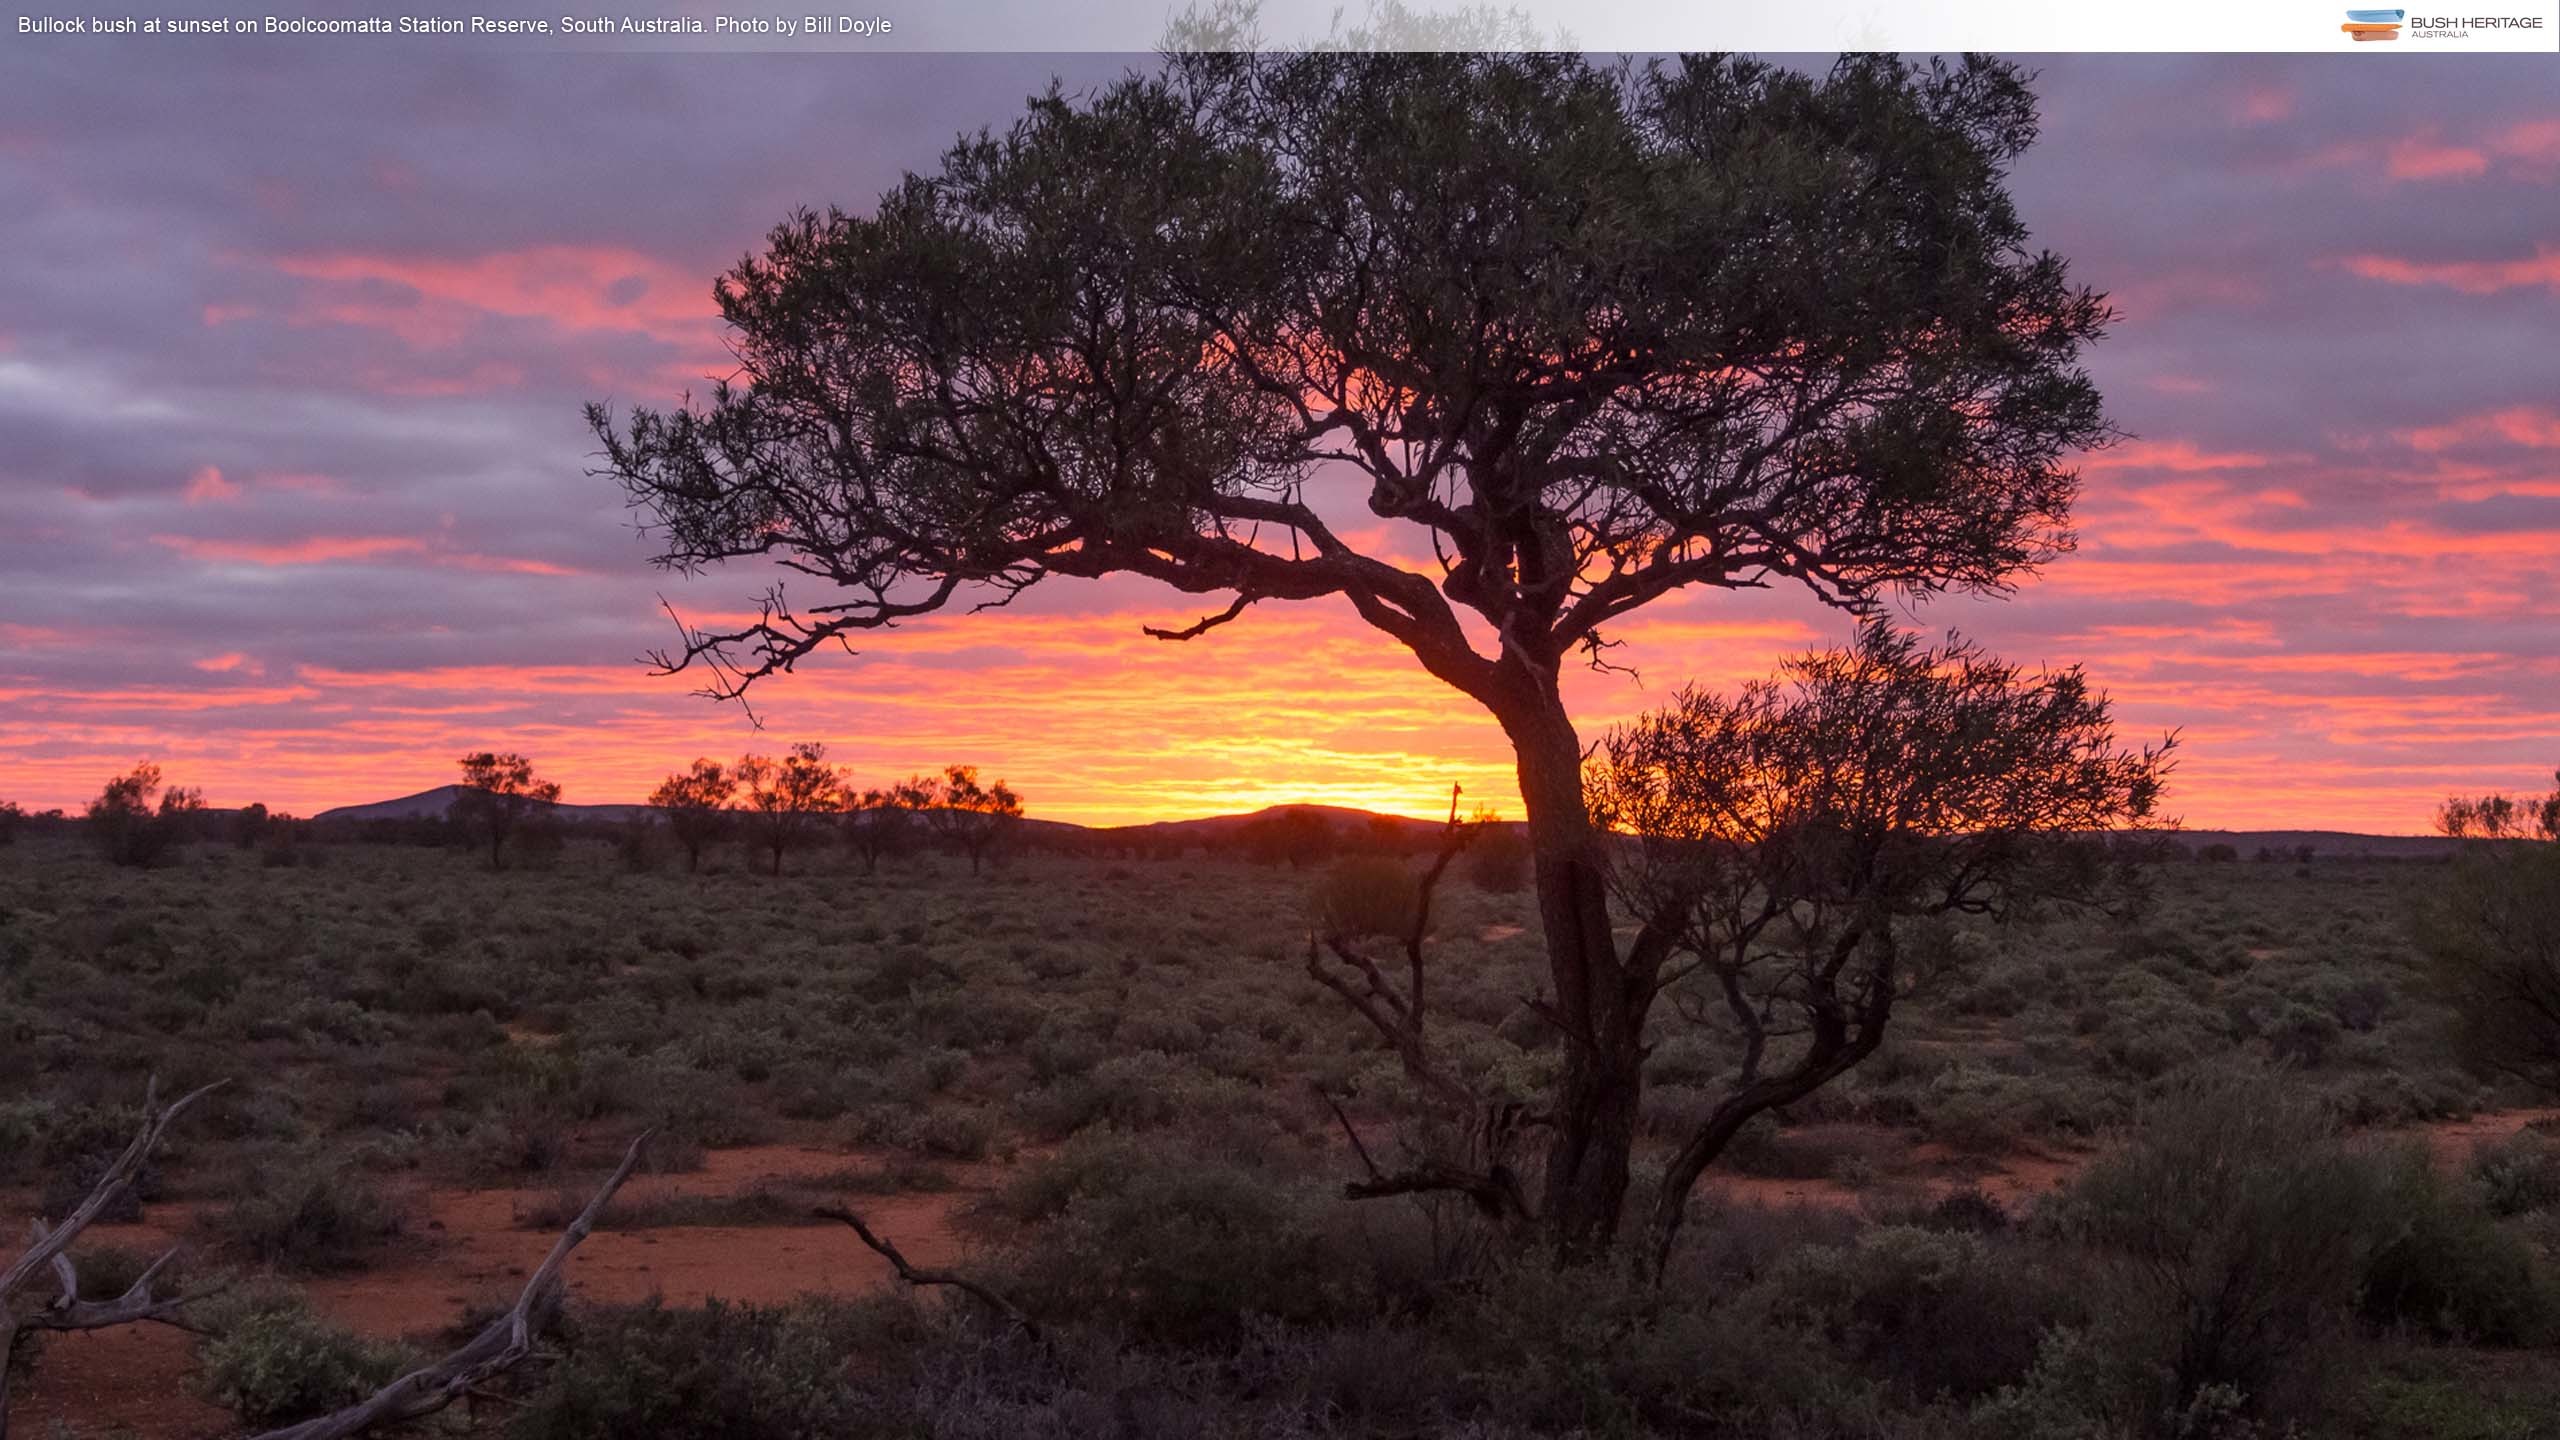 2560x1440 Bullock bush in sunset at Boolcoomatta Reserve, South Australia